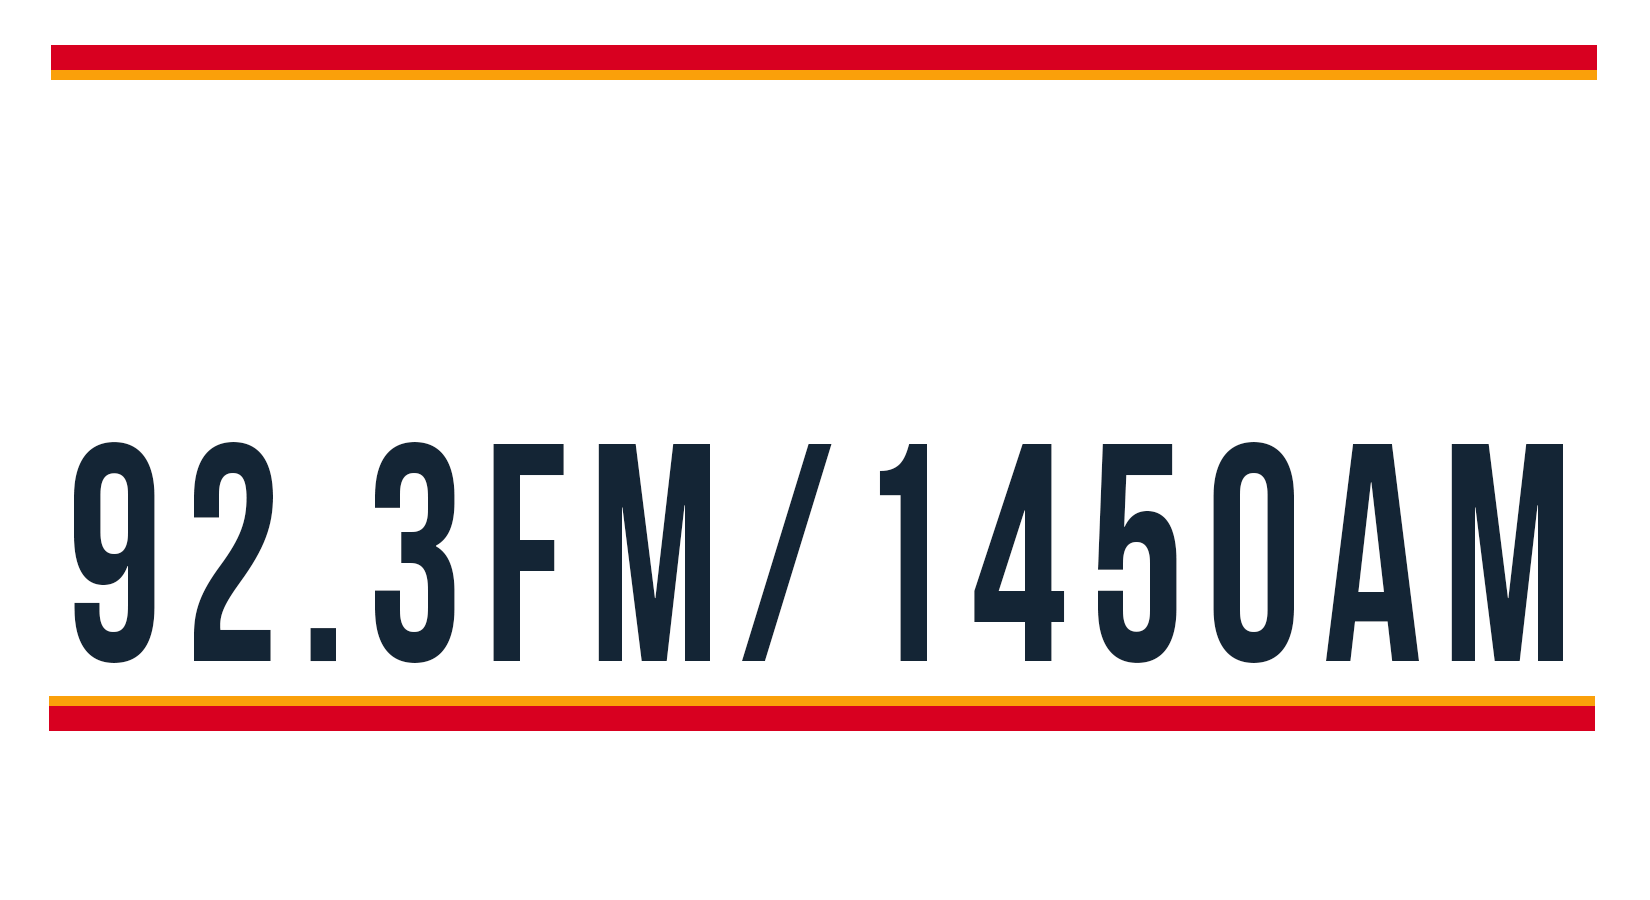 Sports Radio 1450